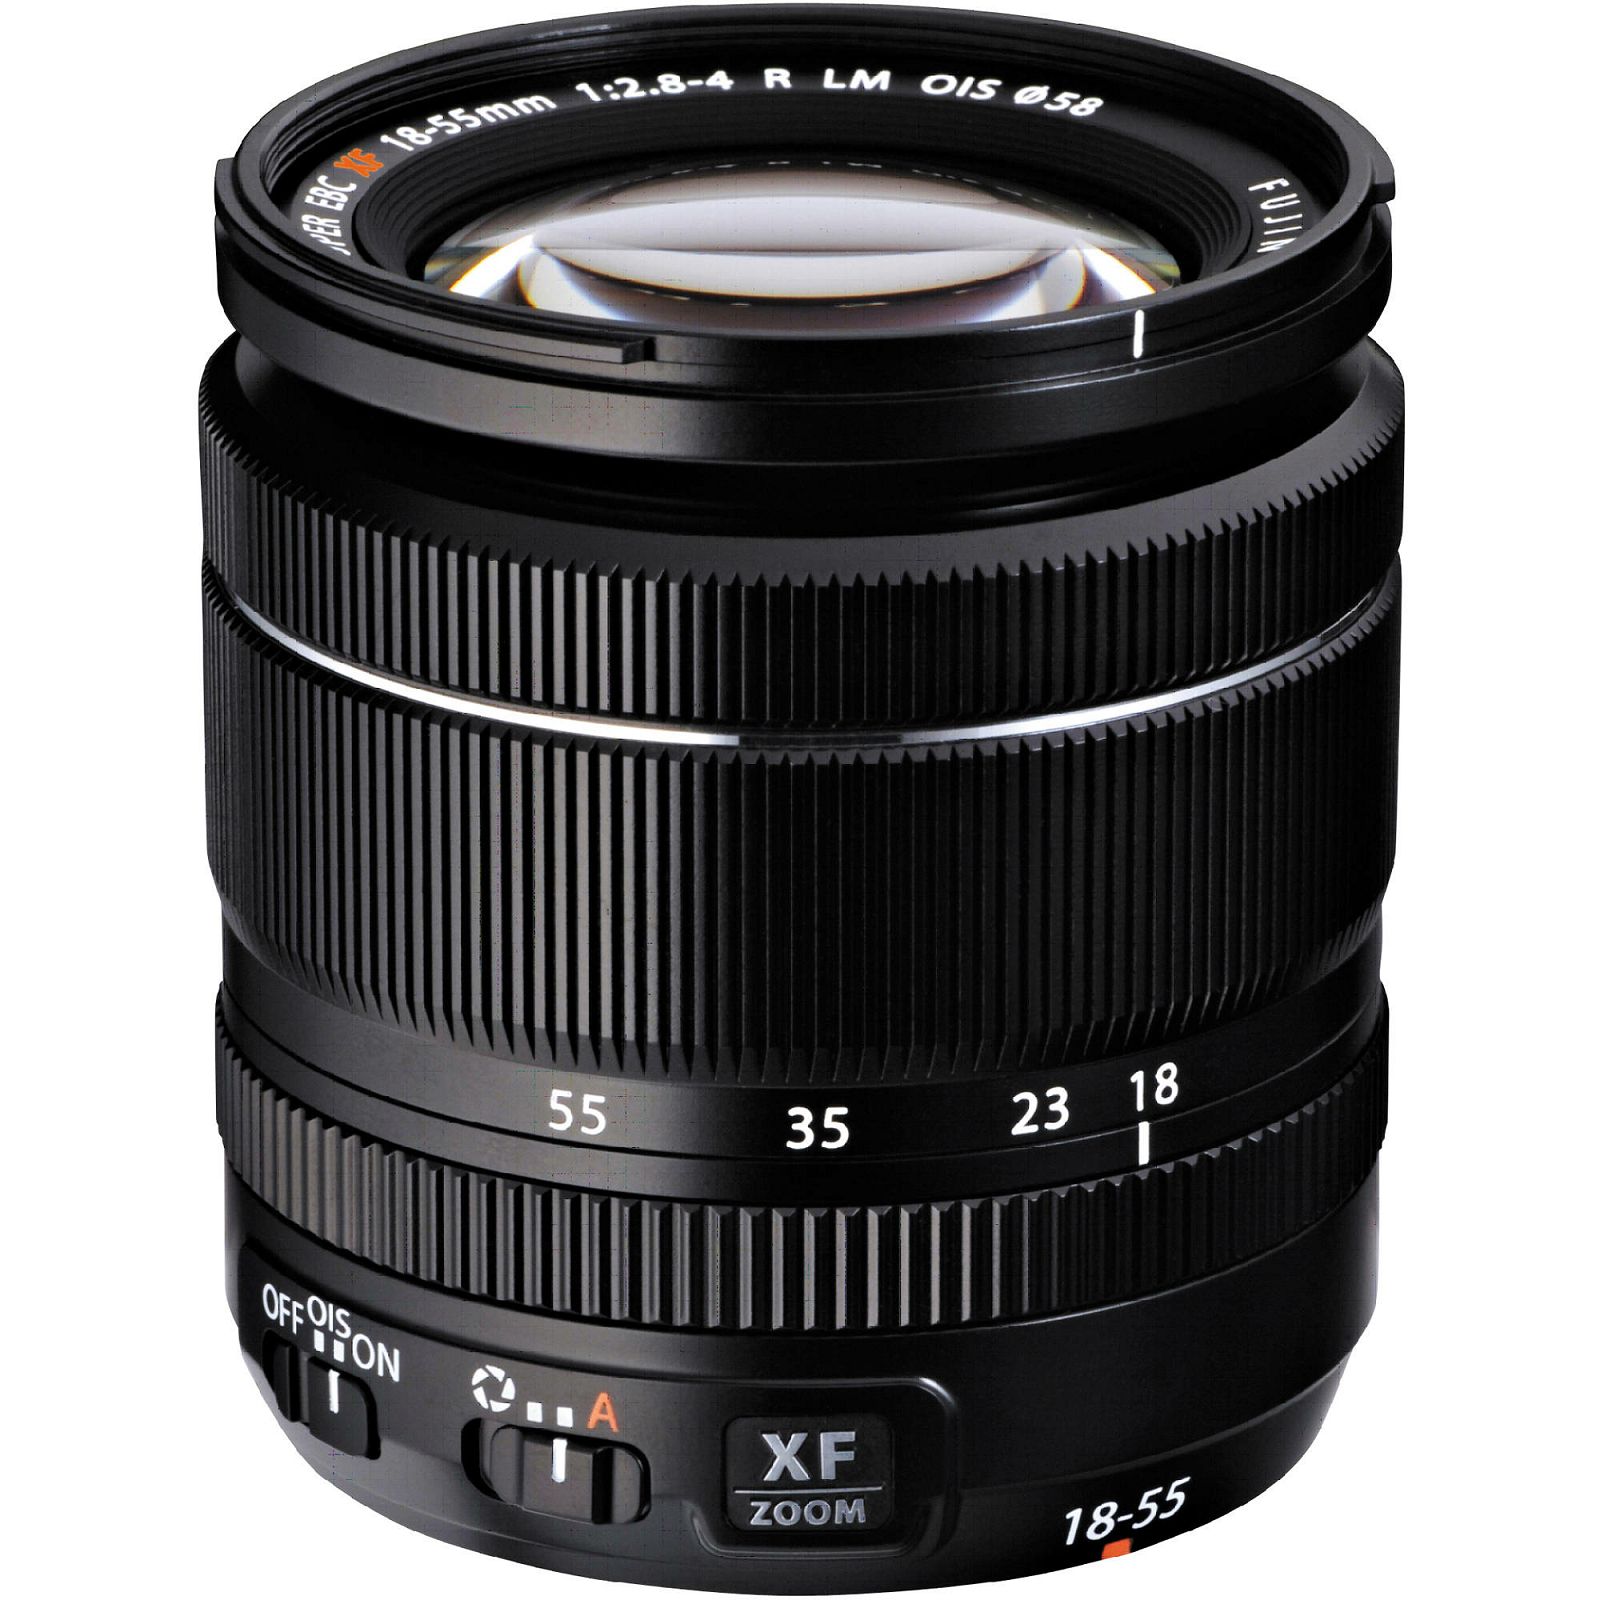 Fujifilm X-E2s + 18-55 Kit Mirrorless Digital Camera Body + lens Fuji digitalni fotoaparat i objektiv 18-55mm